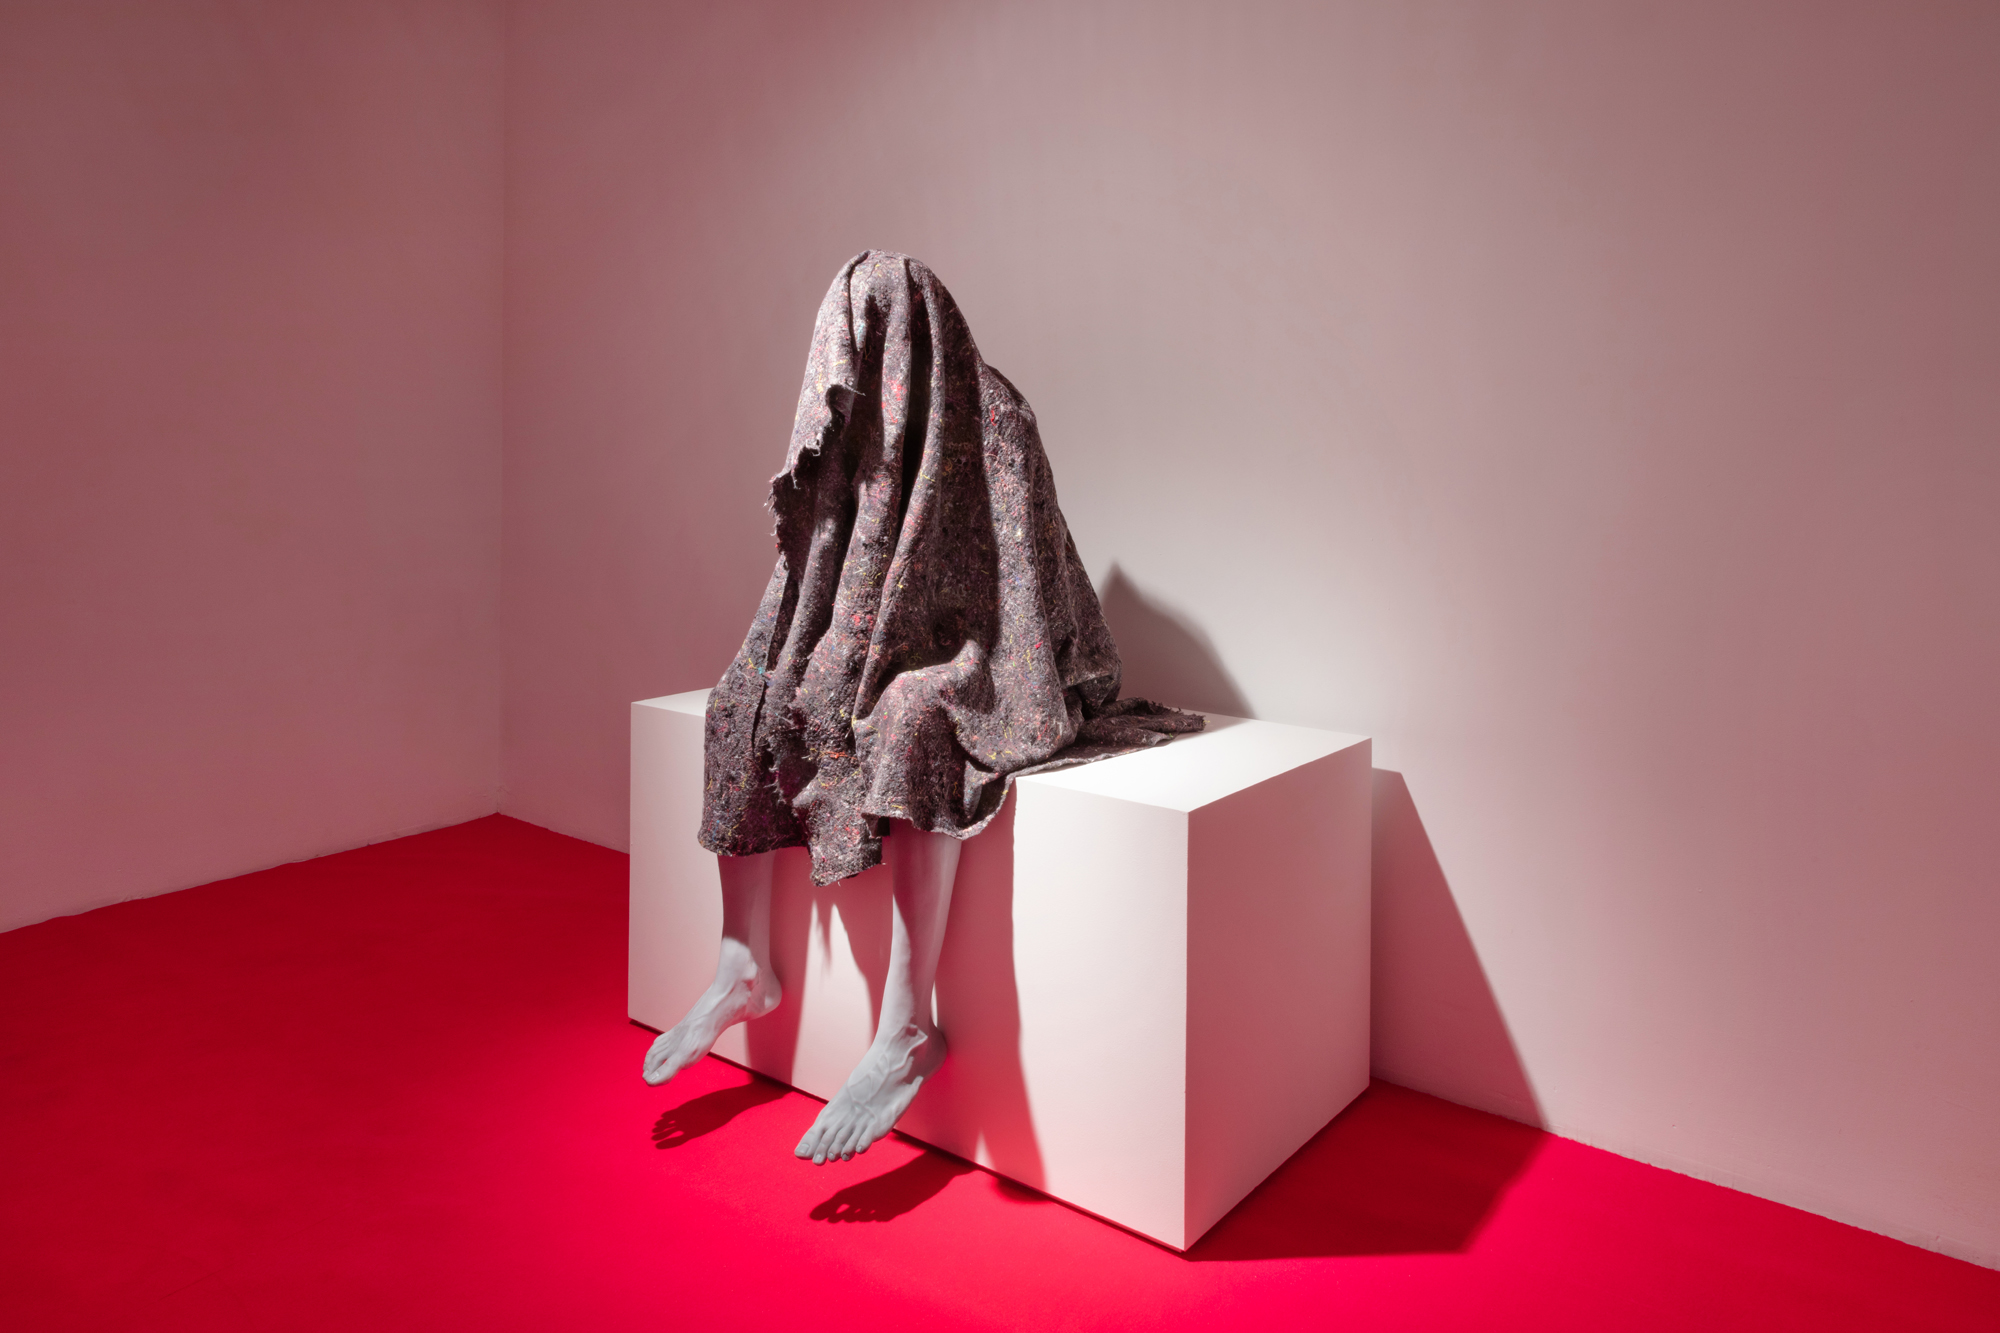   The Ventriloquist  (2019) silicone, resin, fabric 58” x 24” x 36”  Installation view of  The Ventriloquist  at Daniel Faria Gallery, Toronto, Canada 